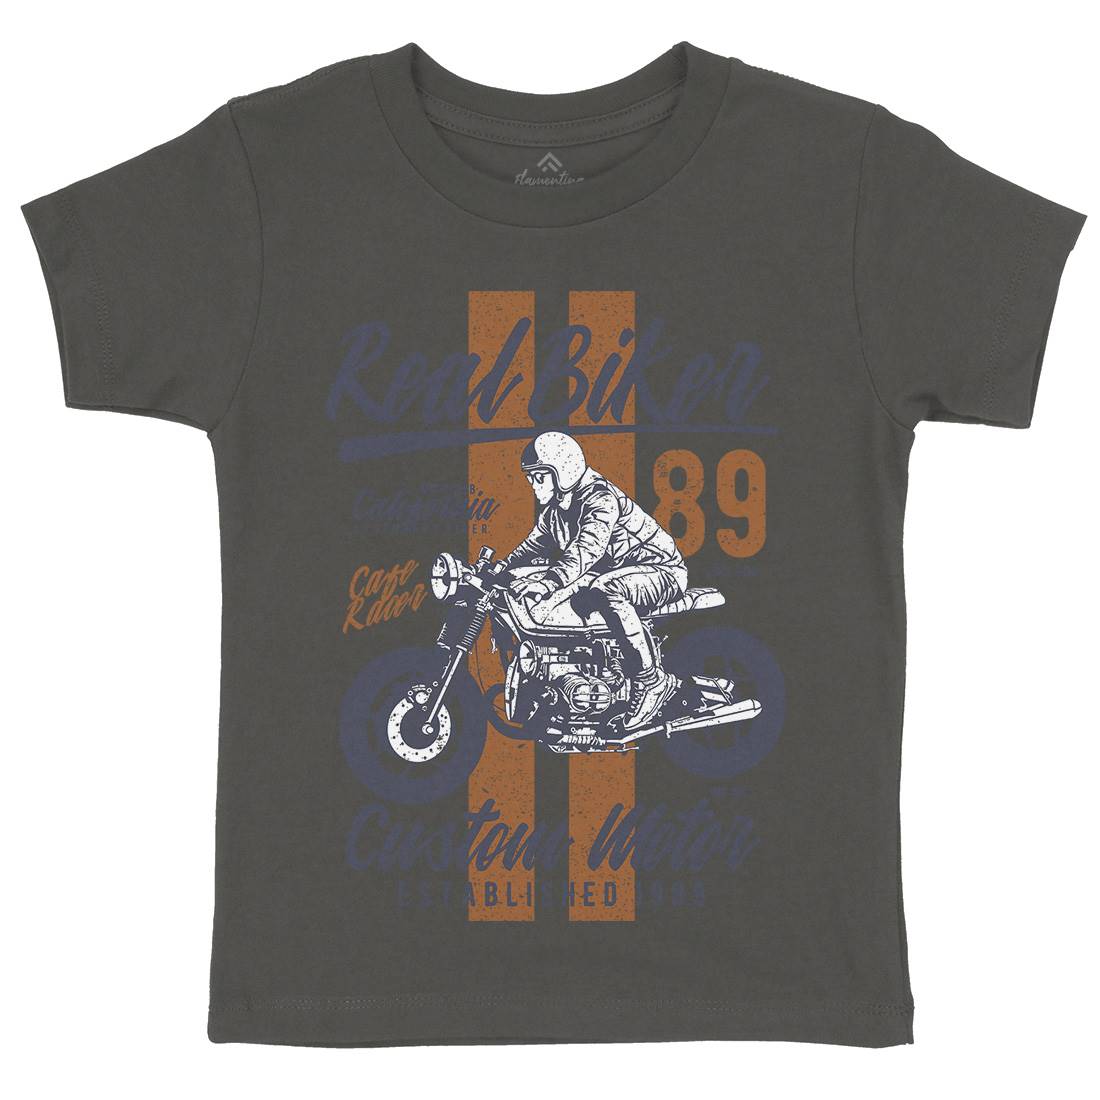 Real Biker Kids Crew Neck T-Shirt Motorcycles A739